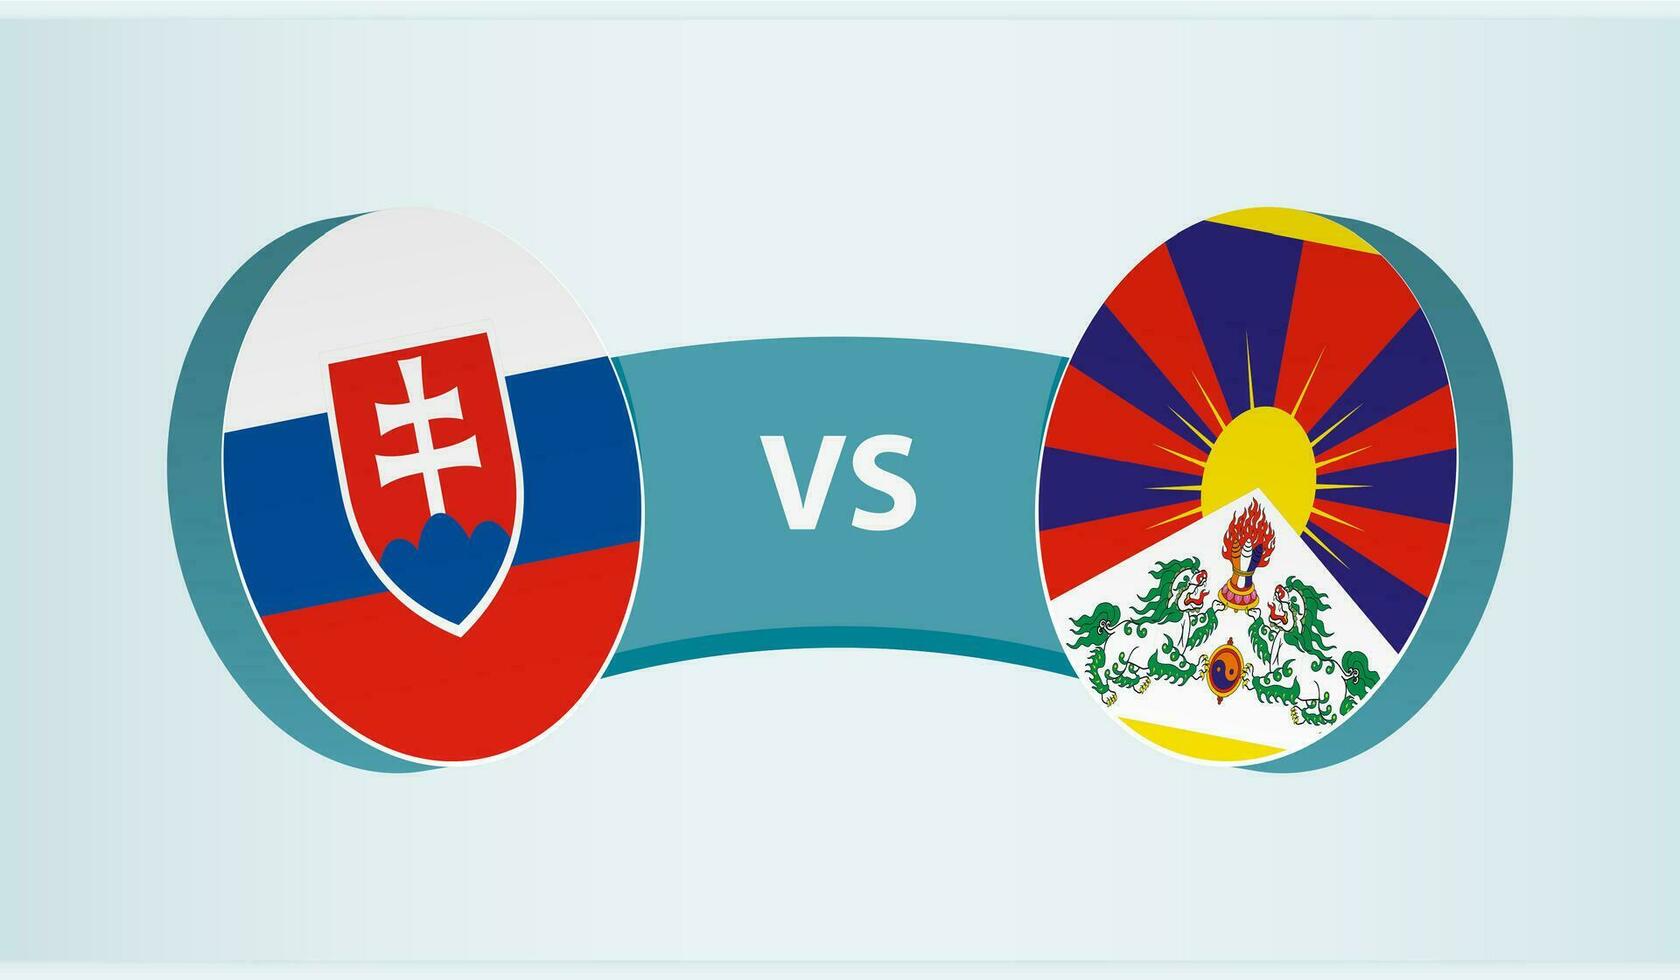 Slovakia versus Tibet, team sports competition concept. vector